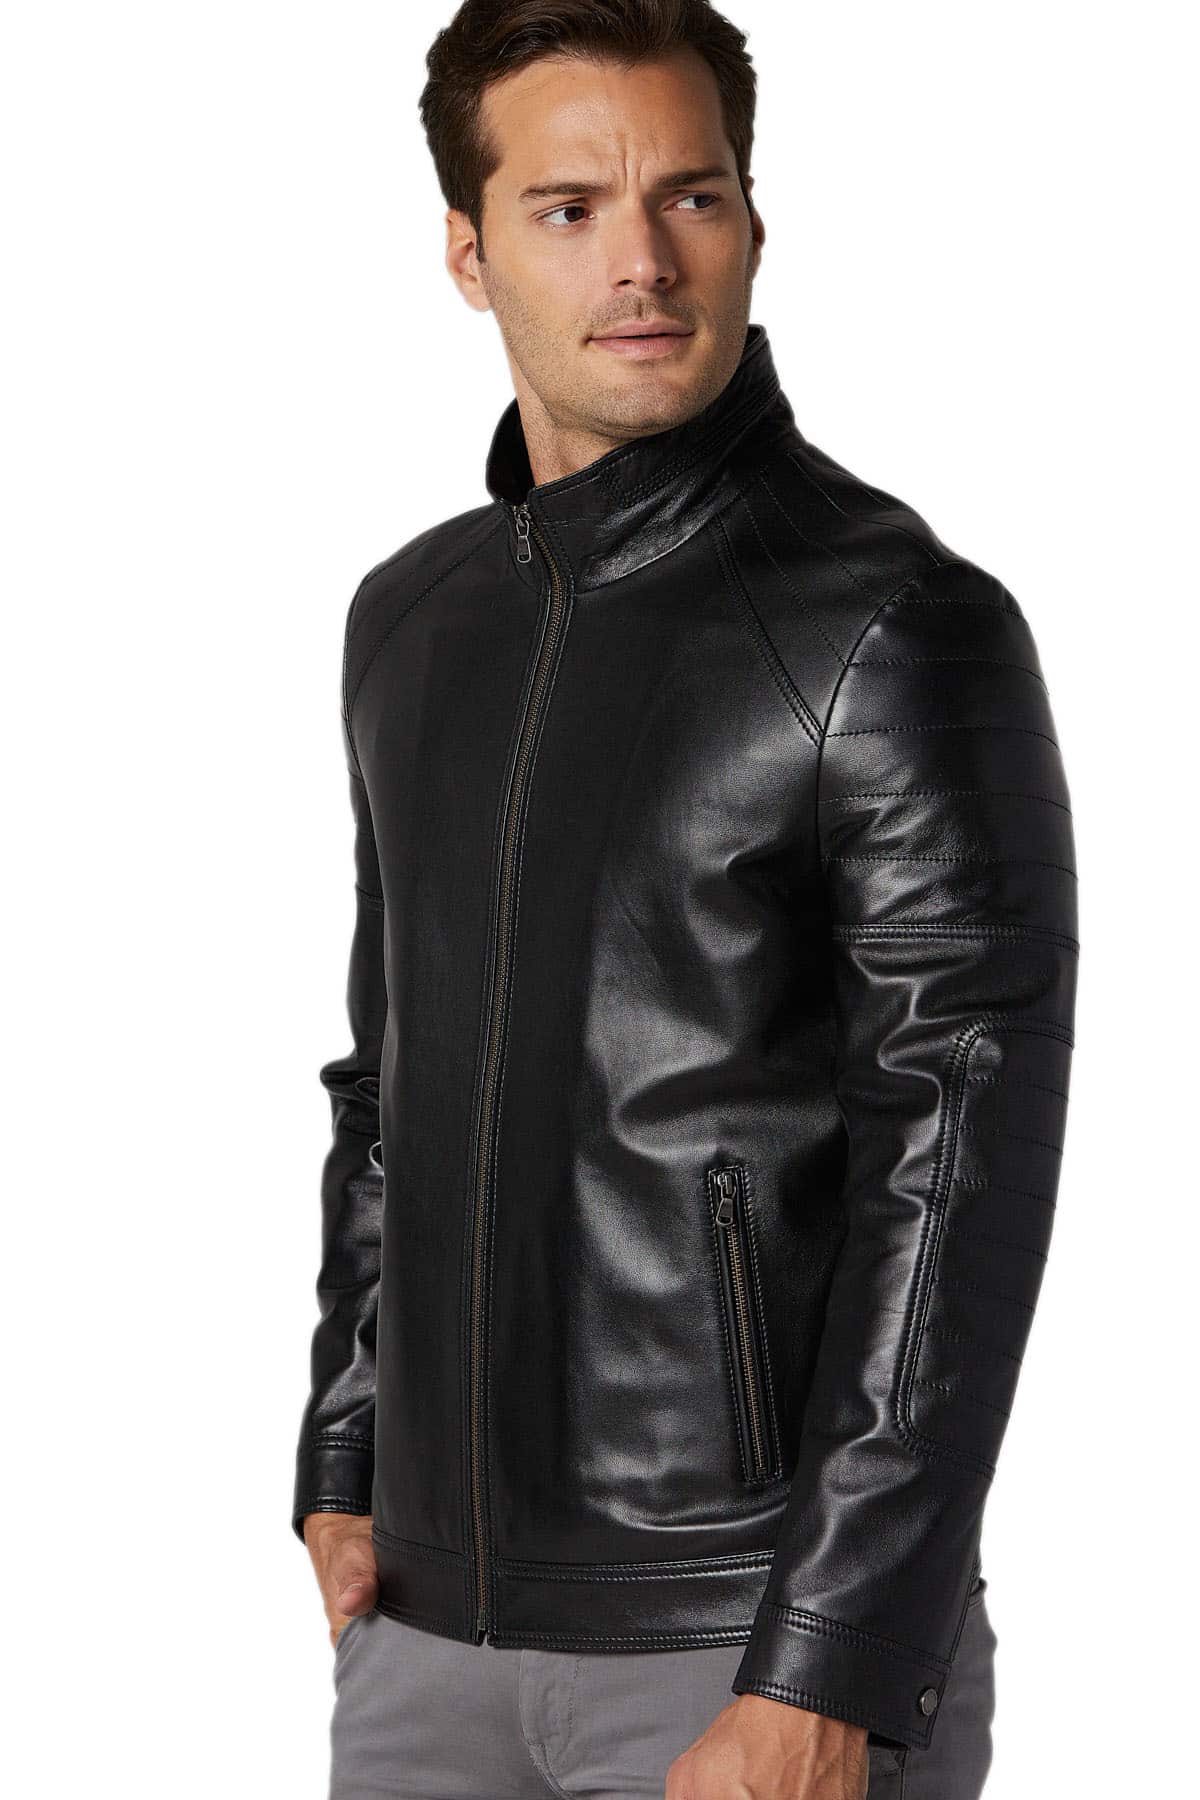 Francisco Lachowski Men's 100 % Real Black Leather Biker Style Jacket